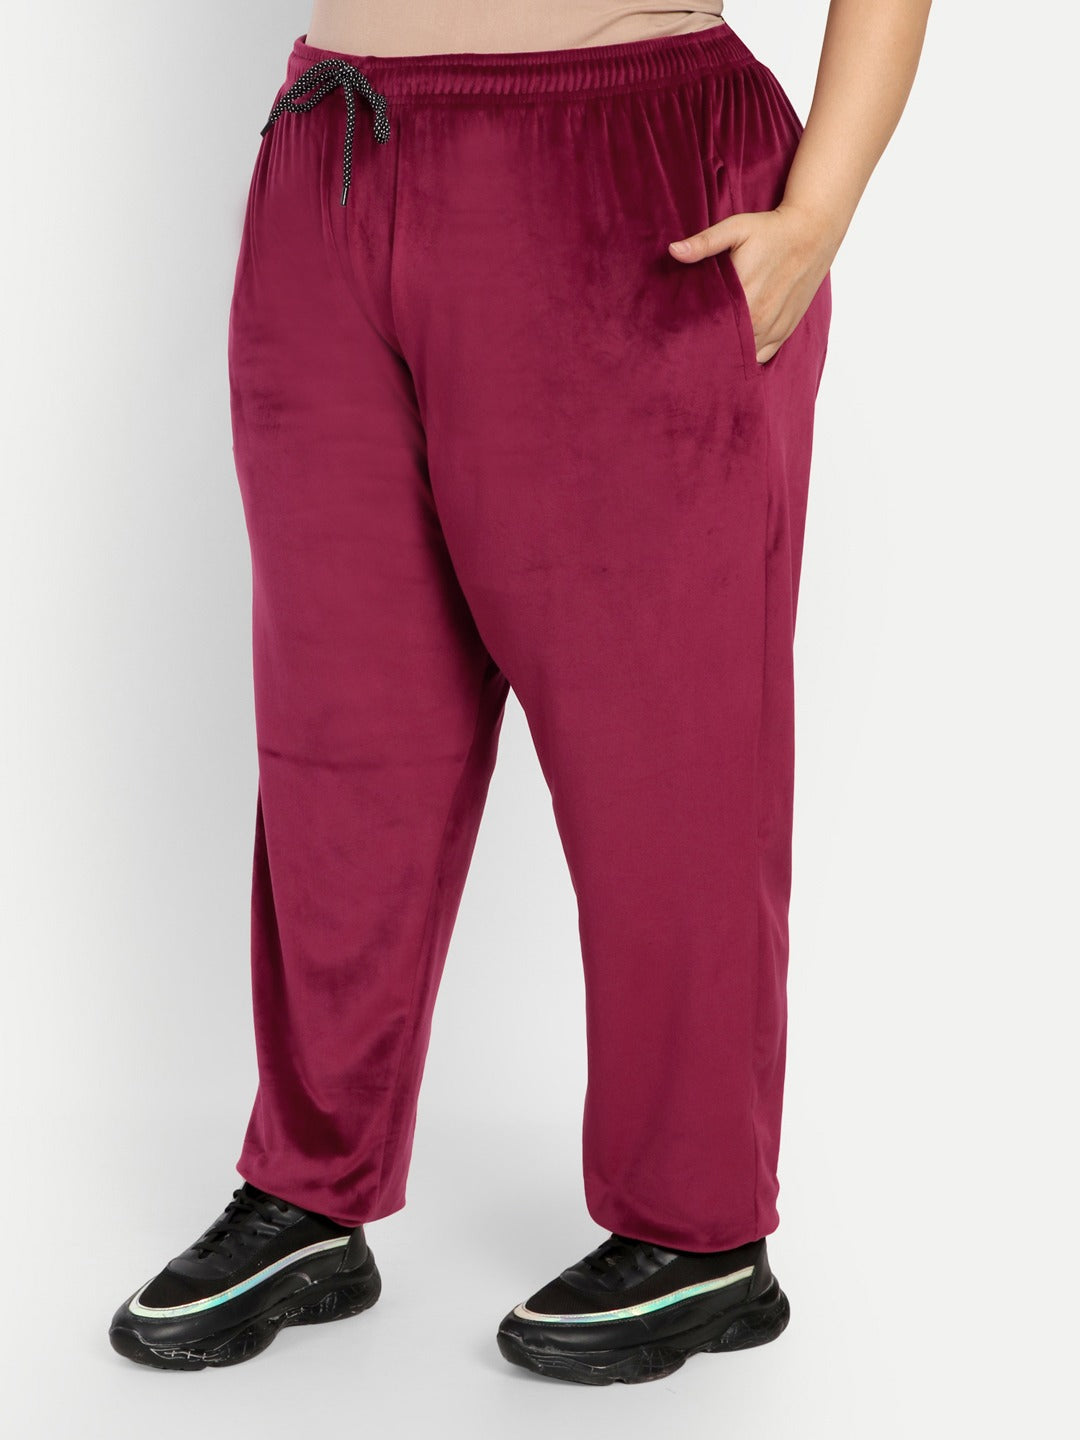 Winter Cotton Velvet Pyjamas For Women - Maroon